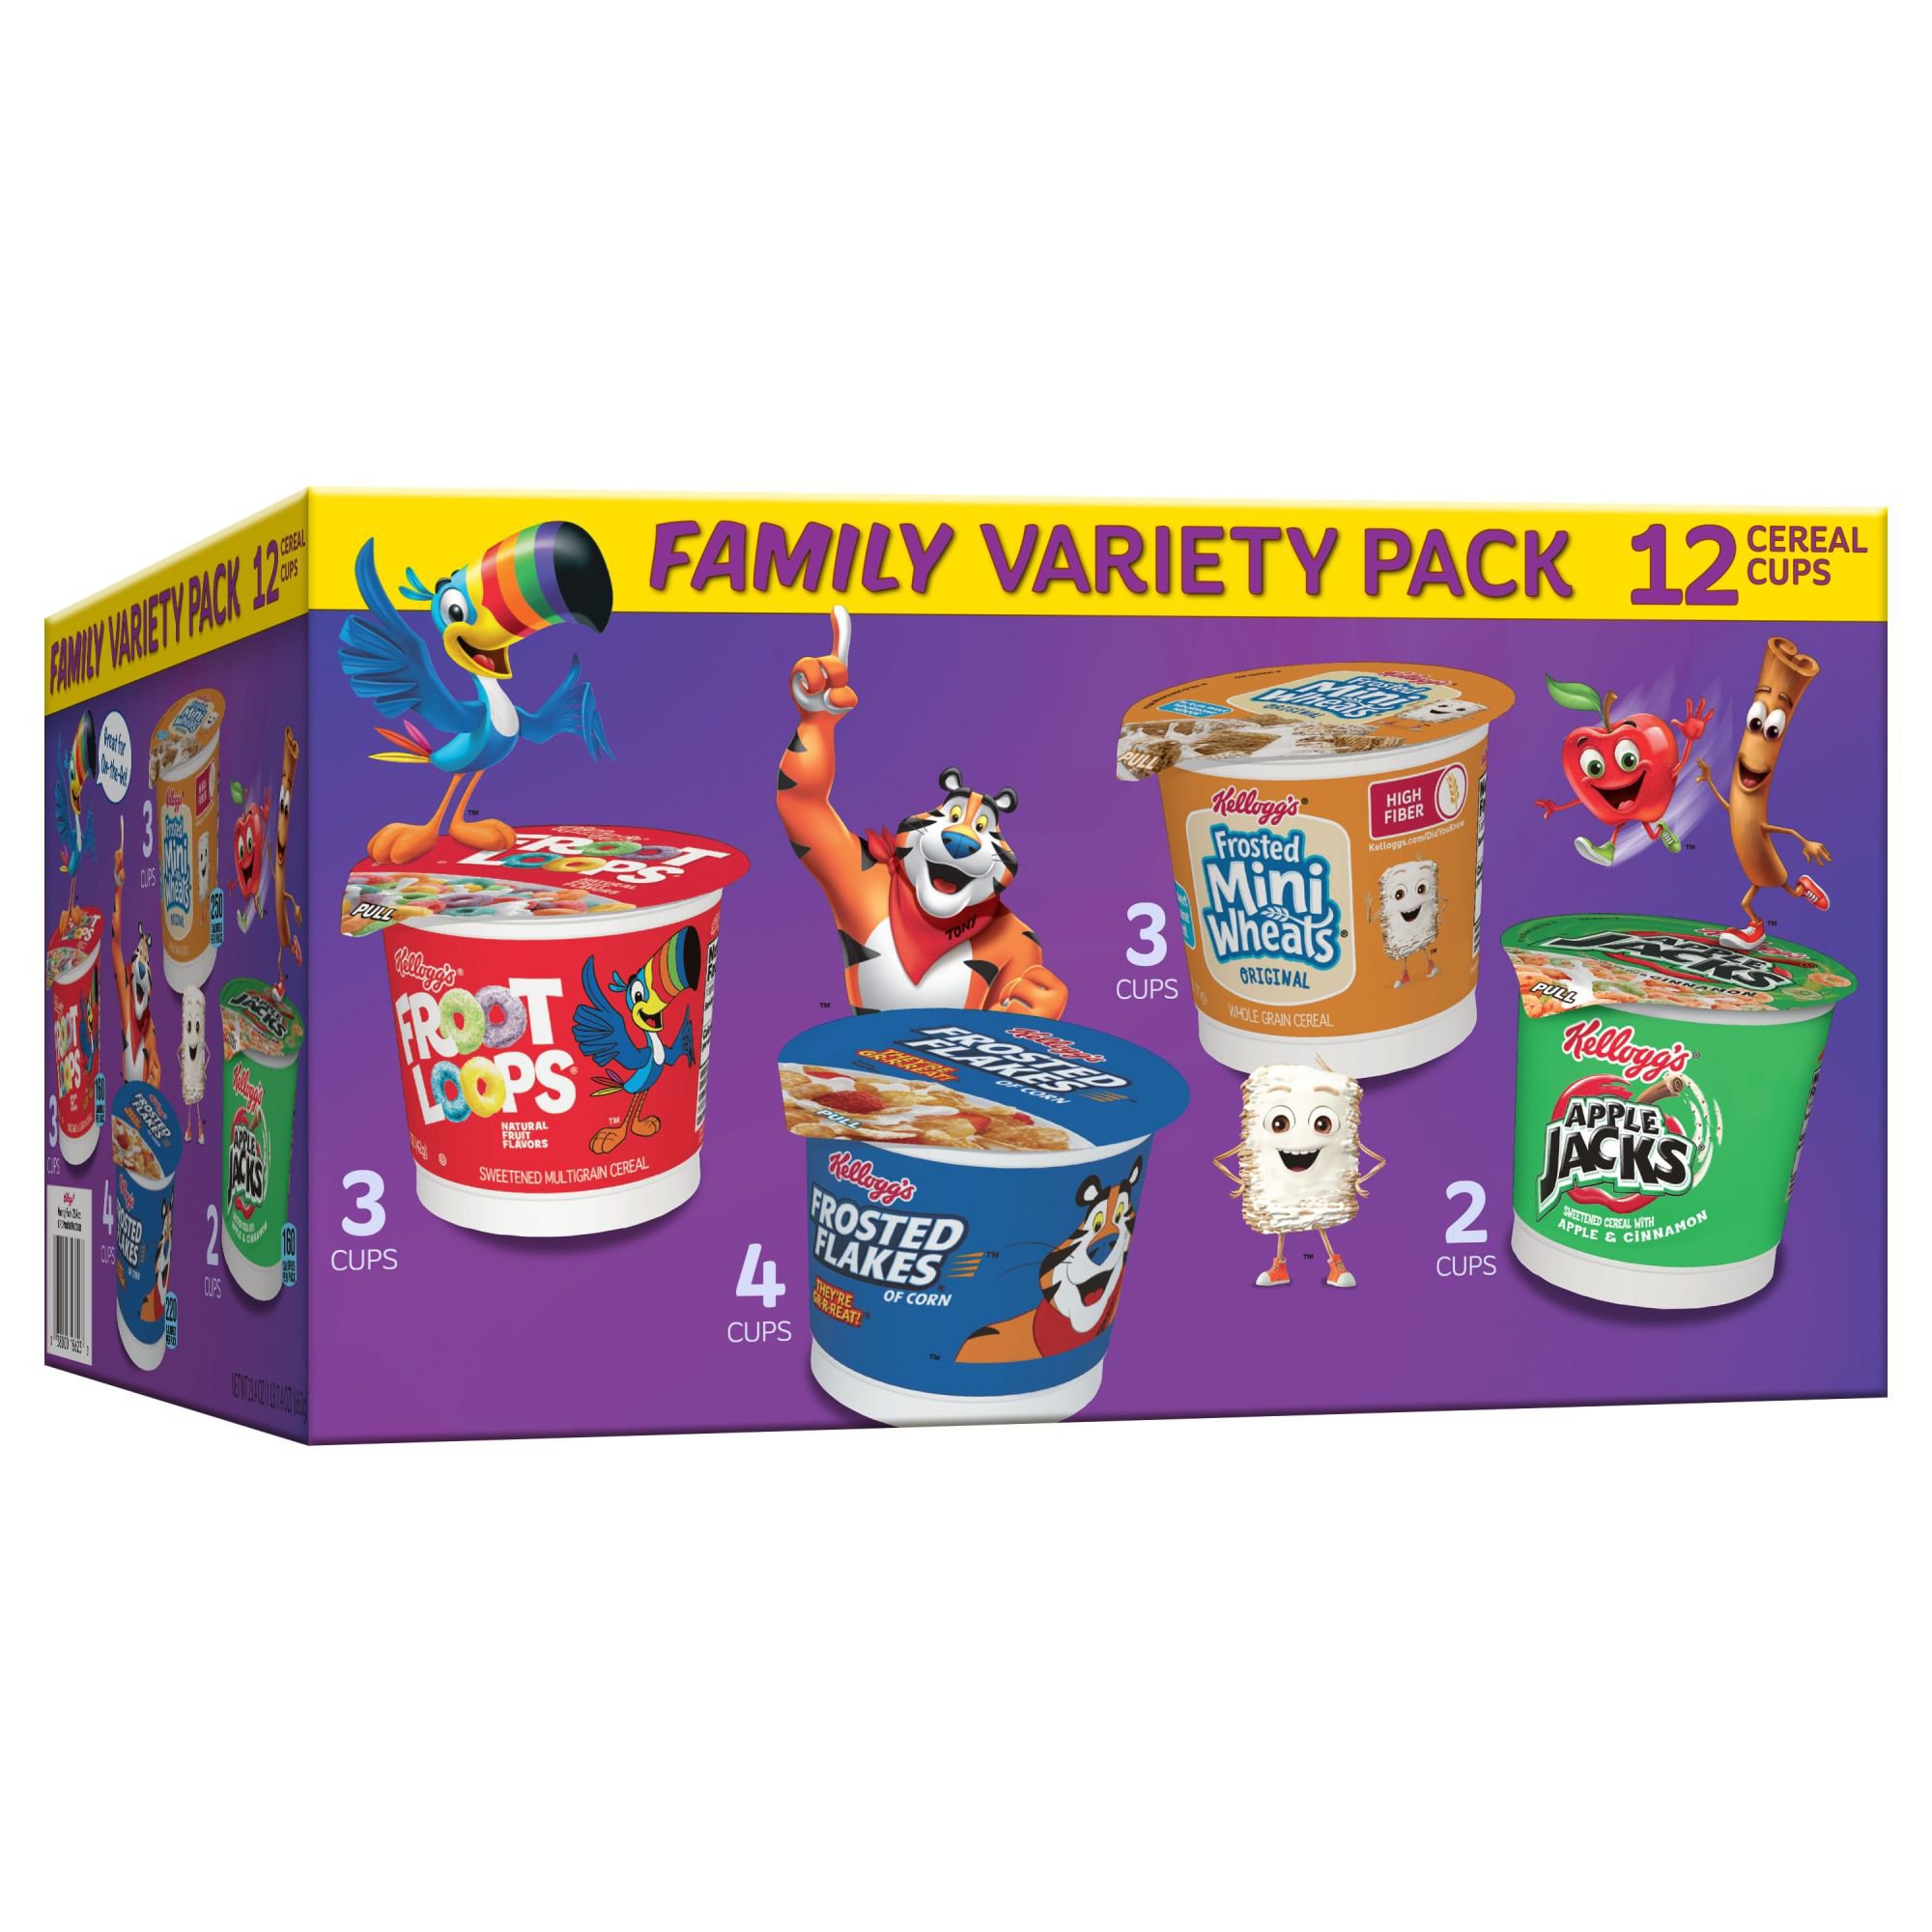 Froot Loops Cereal, Jumbo Snax, Jumbo Size - 30 pack, 0.45 oz packs